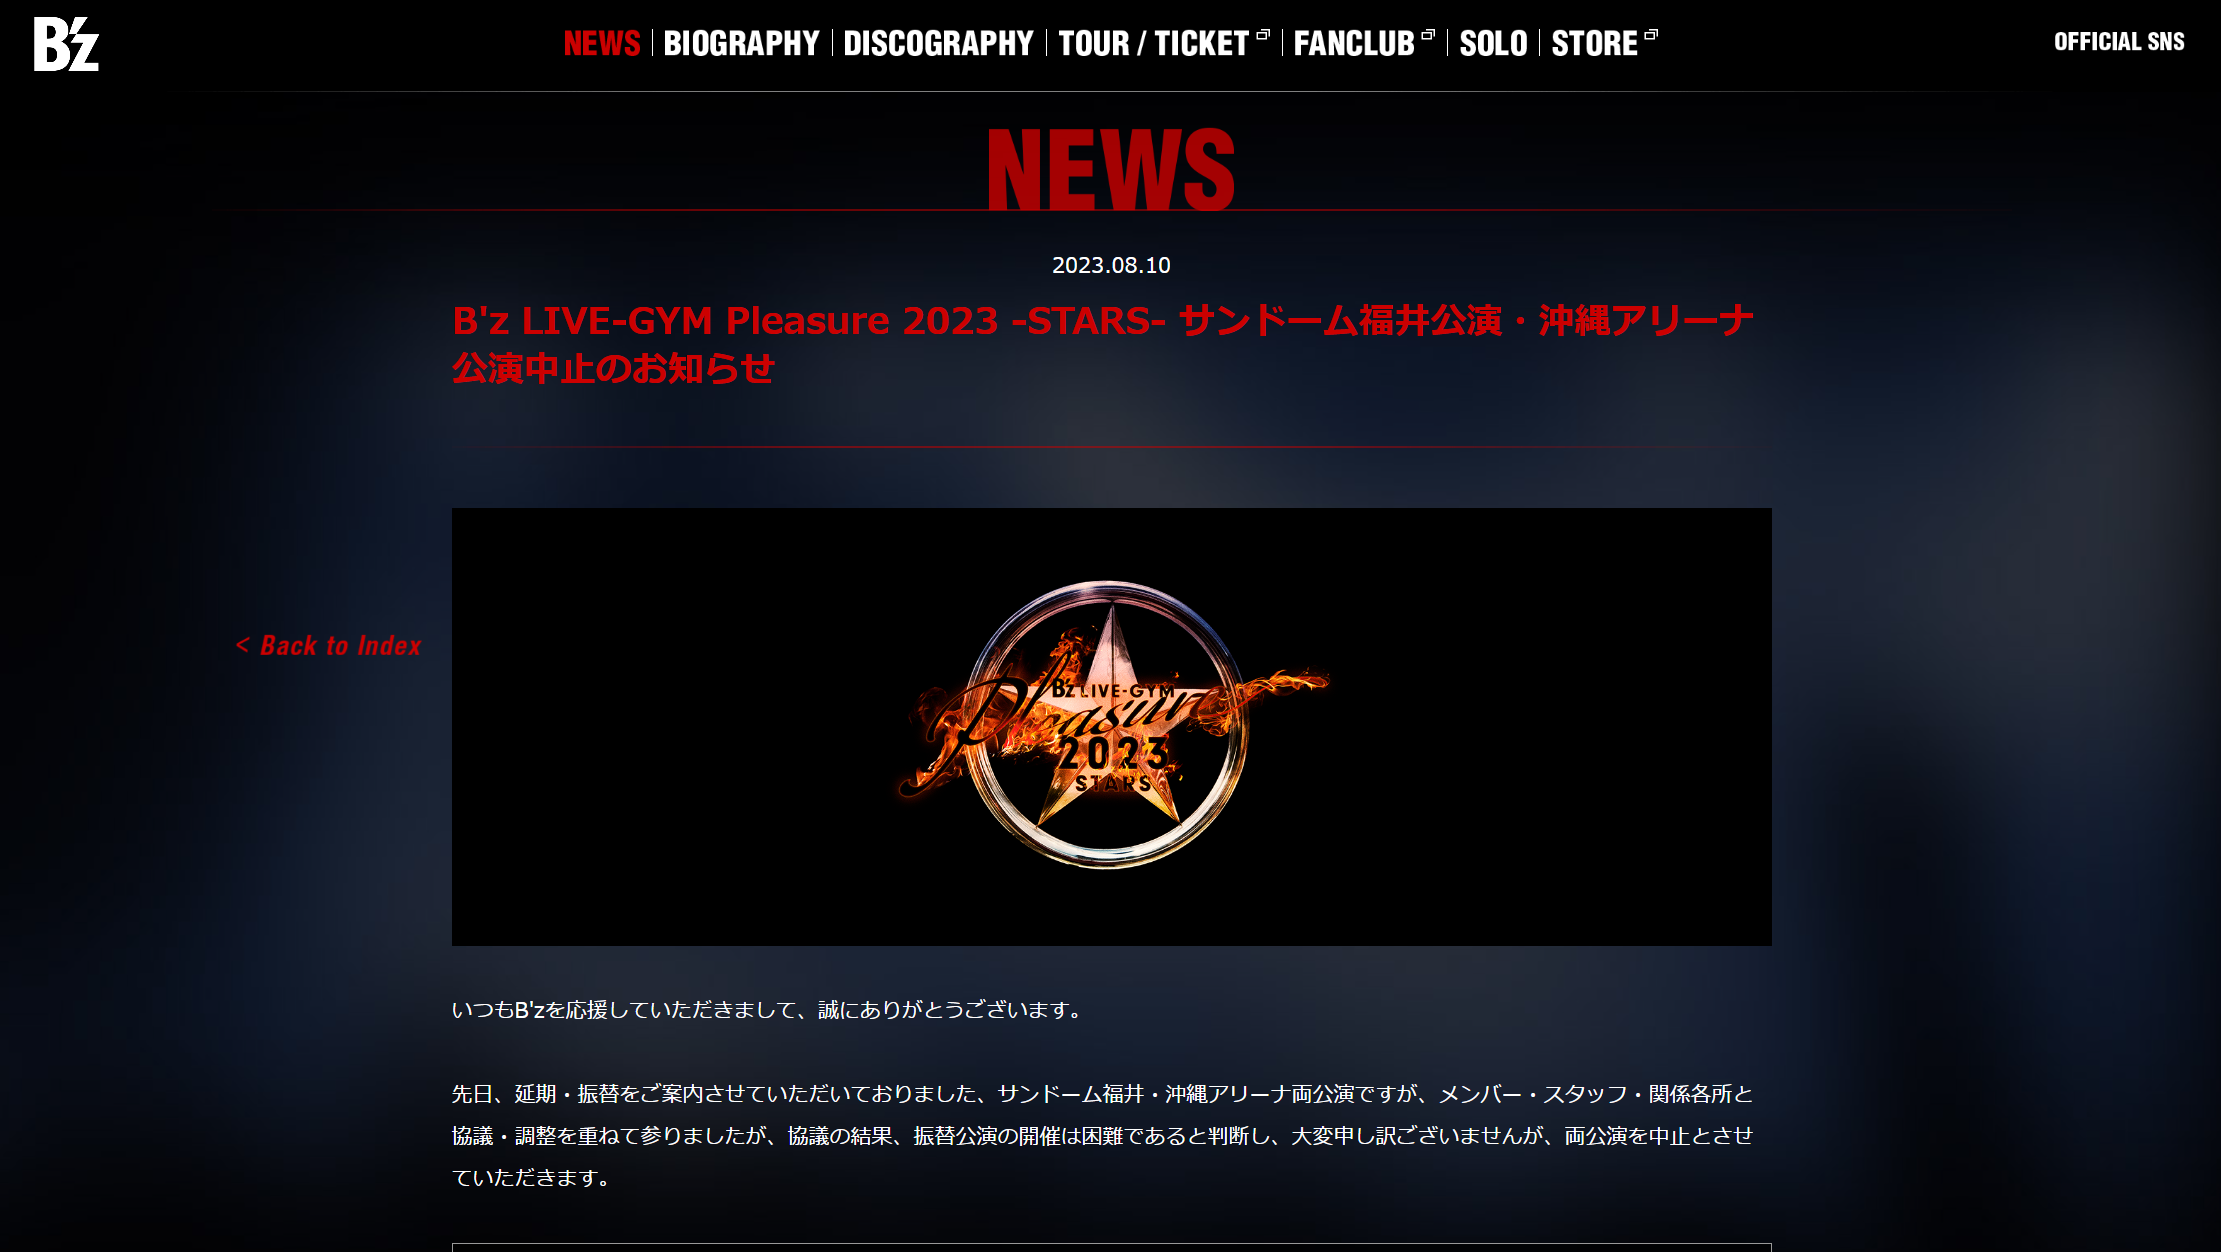 『B'z LIVE-GYM Pleasure 2023 -STARS-』福井・沖縄公演の中止を伝える公式サイトの案内